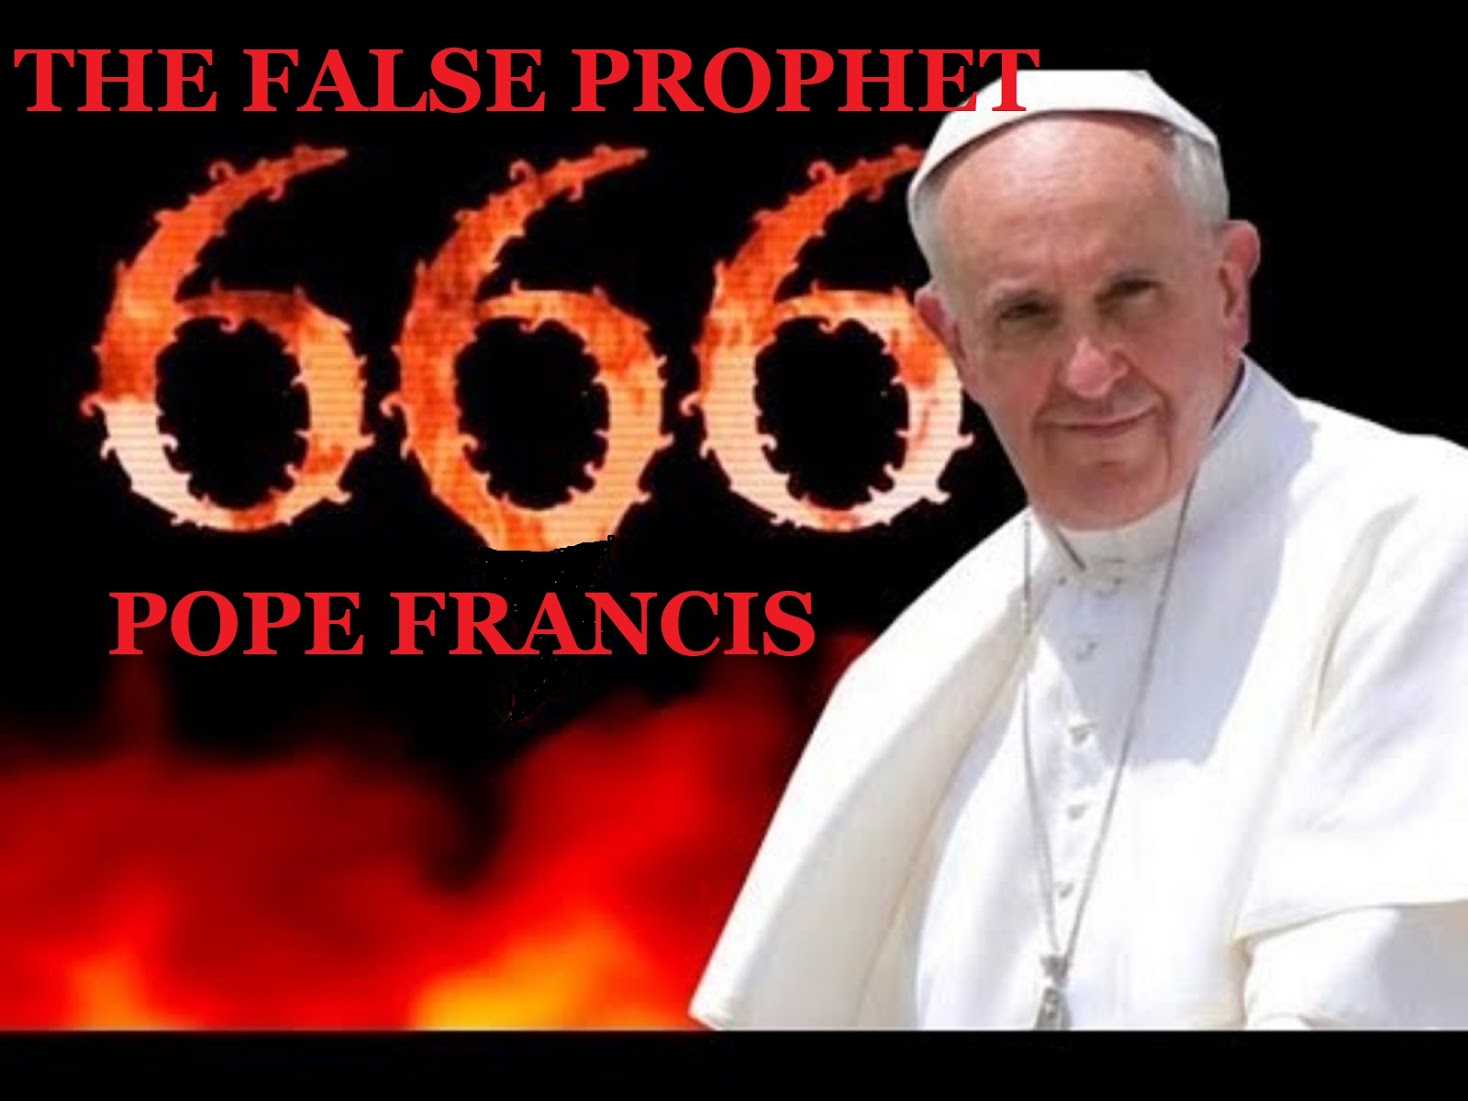 POPE FRANCIS - THE FALSE PROPHET